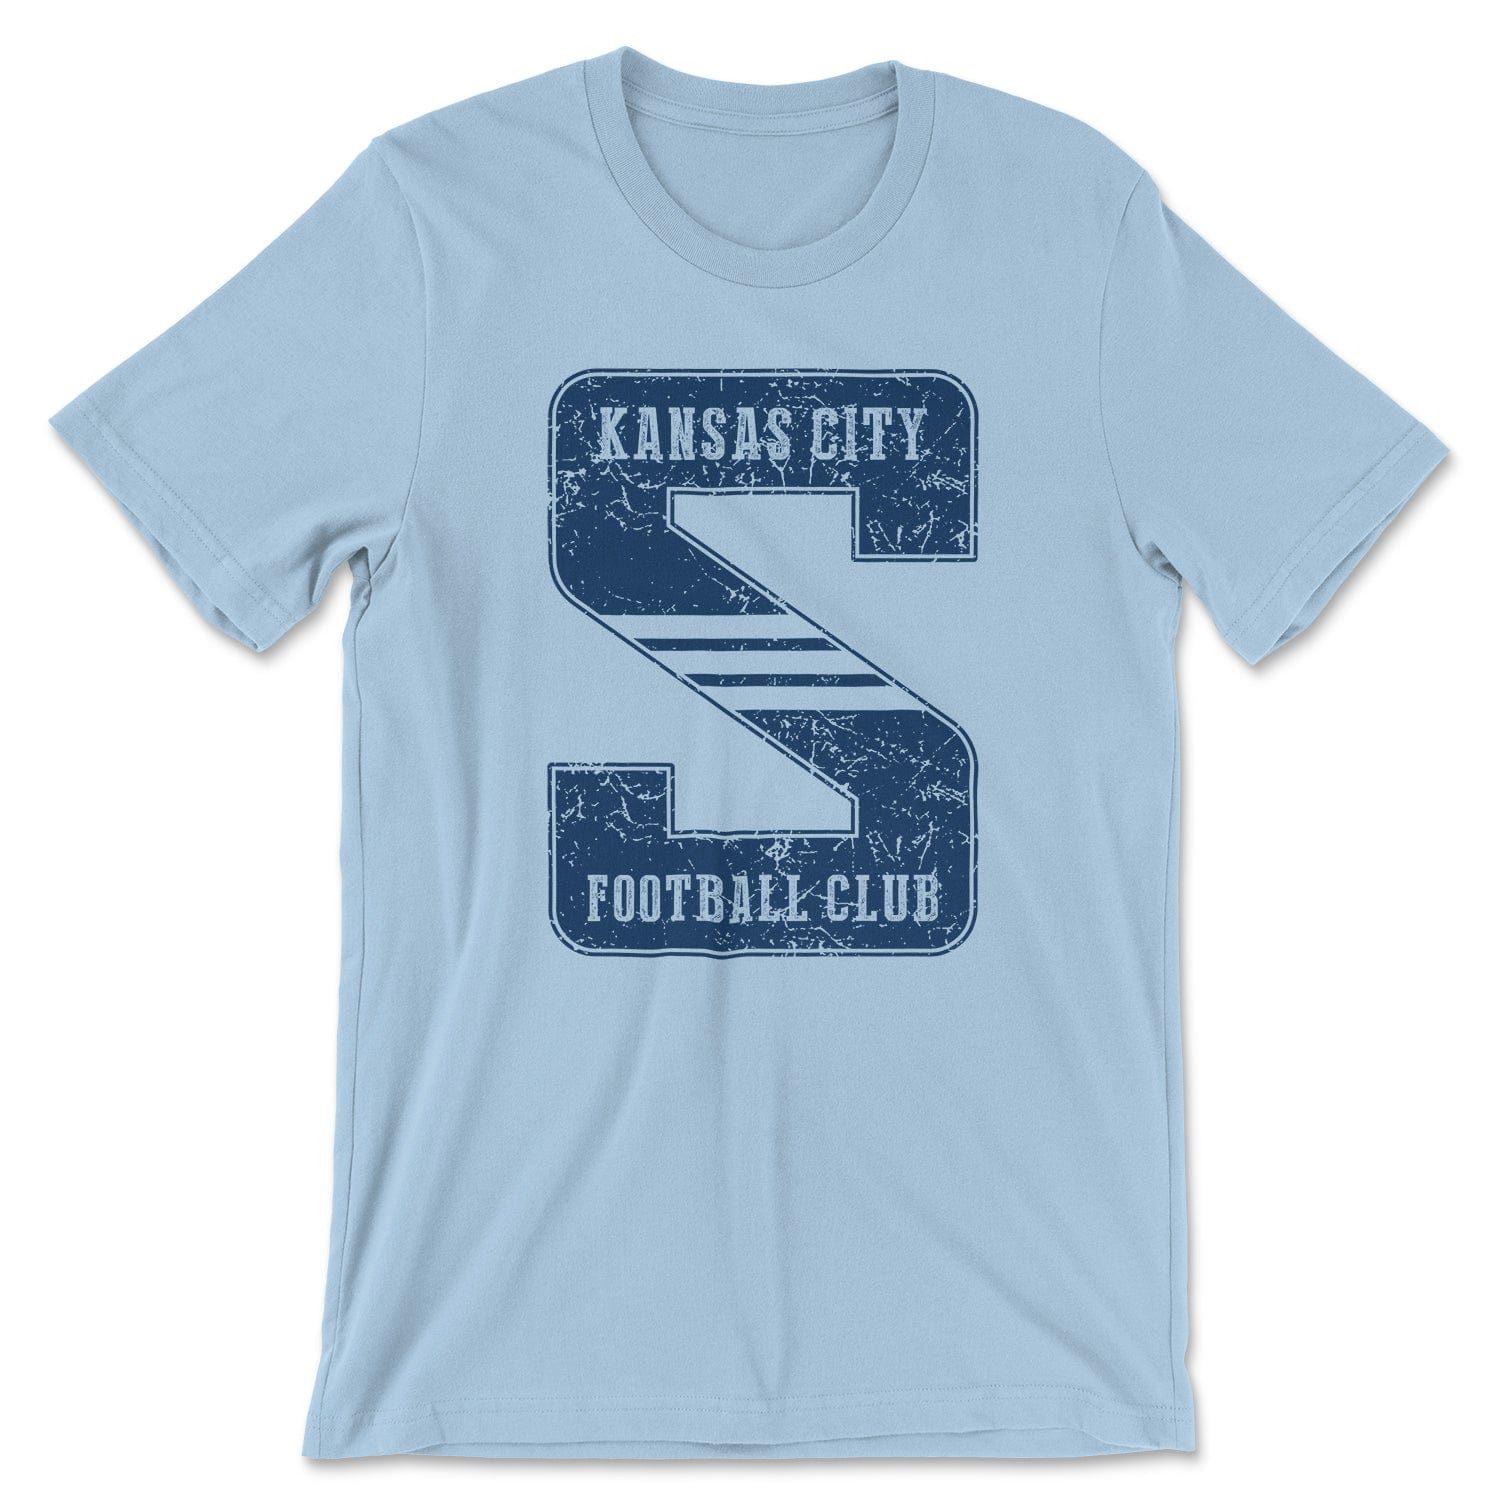 KC Swag Sporting Kansas City navy KANSAS CITY FOOTBALL CLUB on giant striped S on lite blue t-shirt